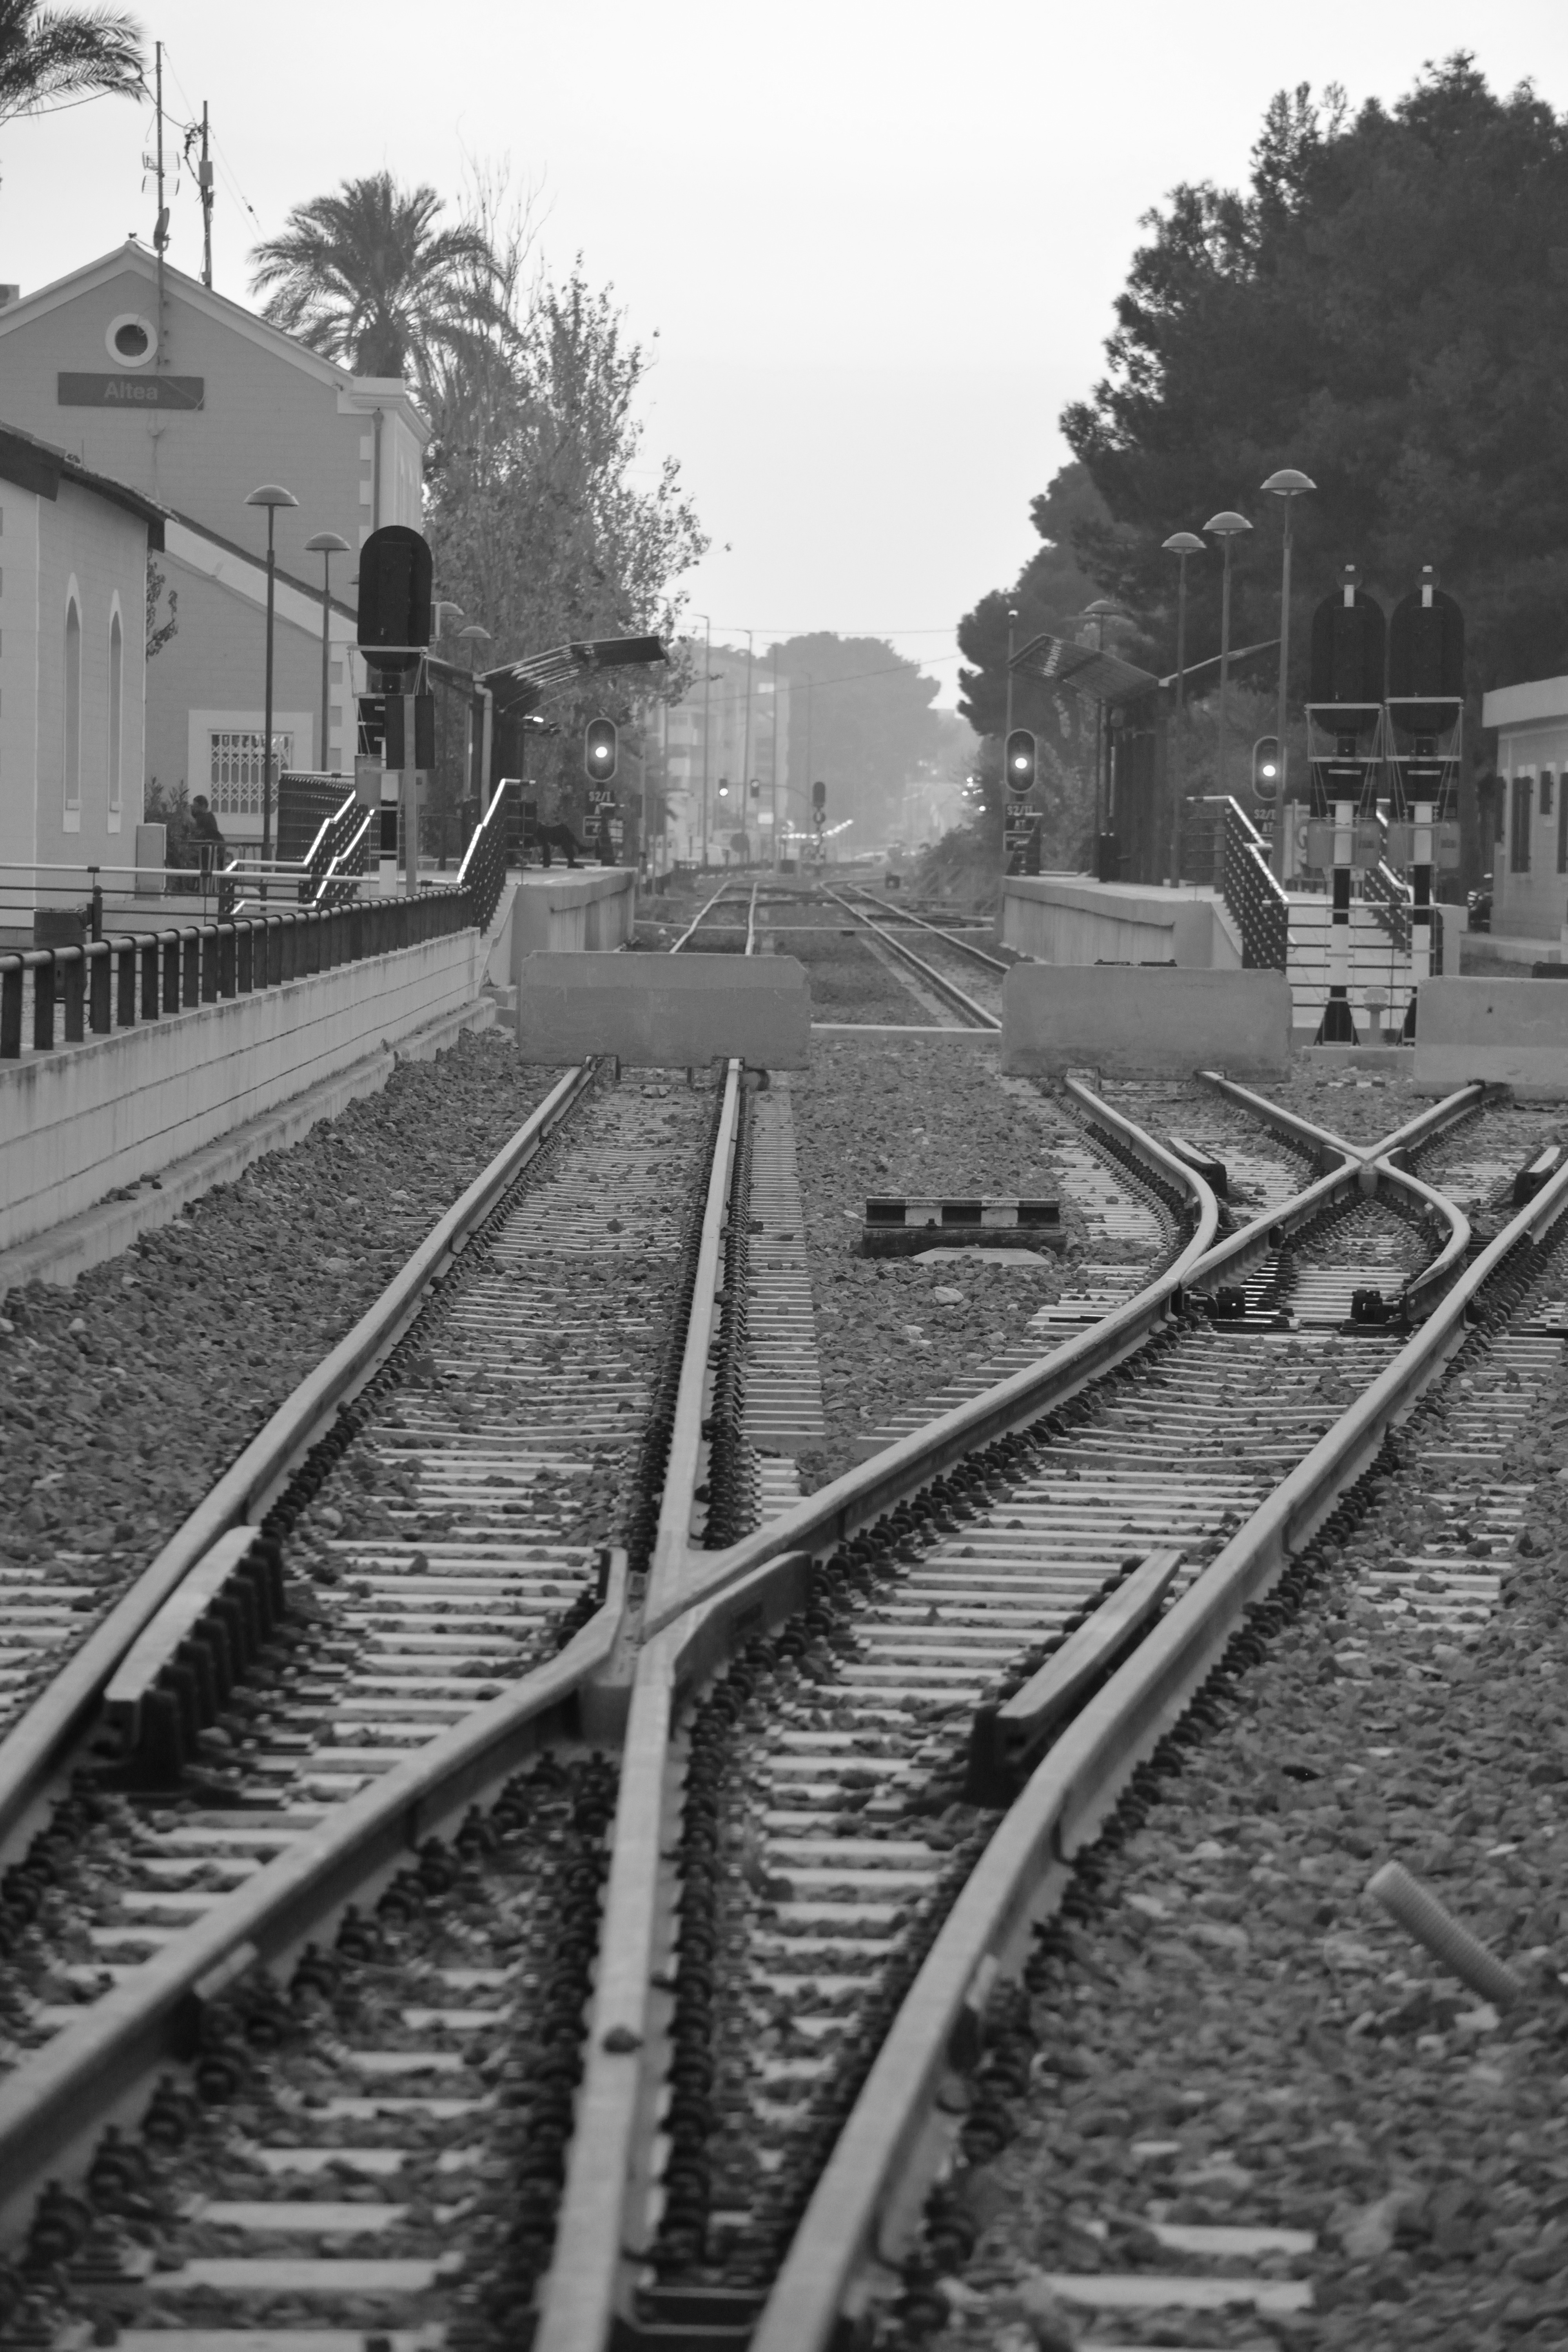 greyscale photo of train railings